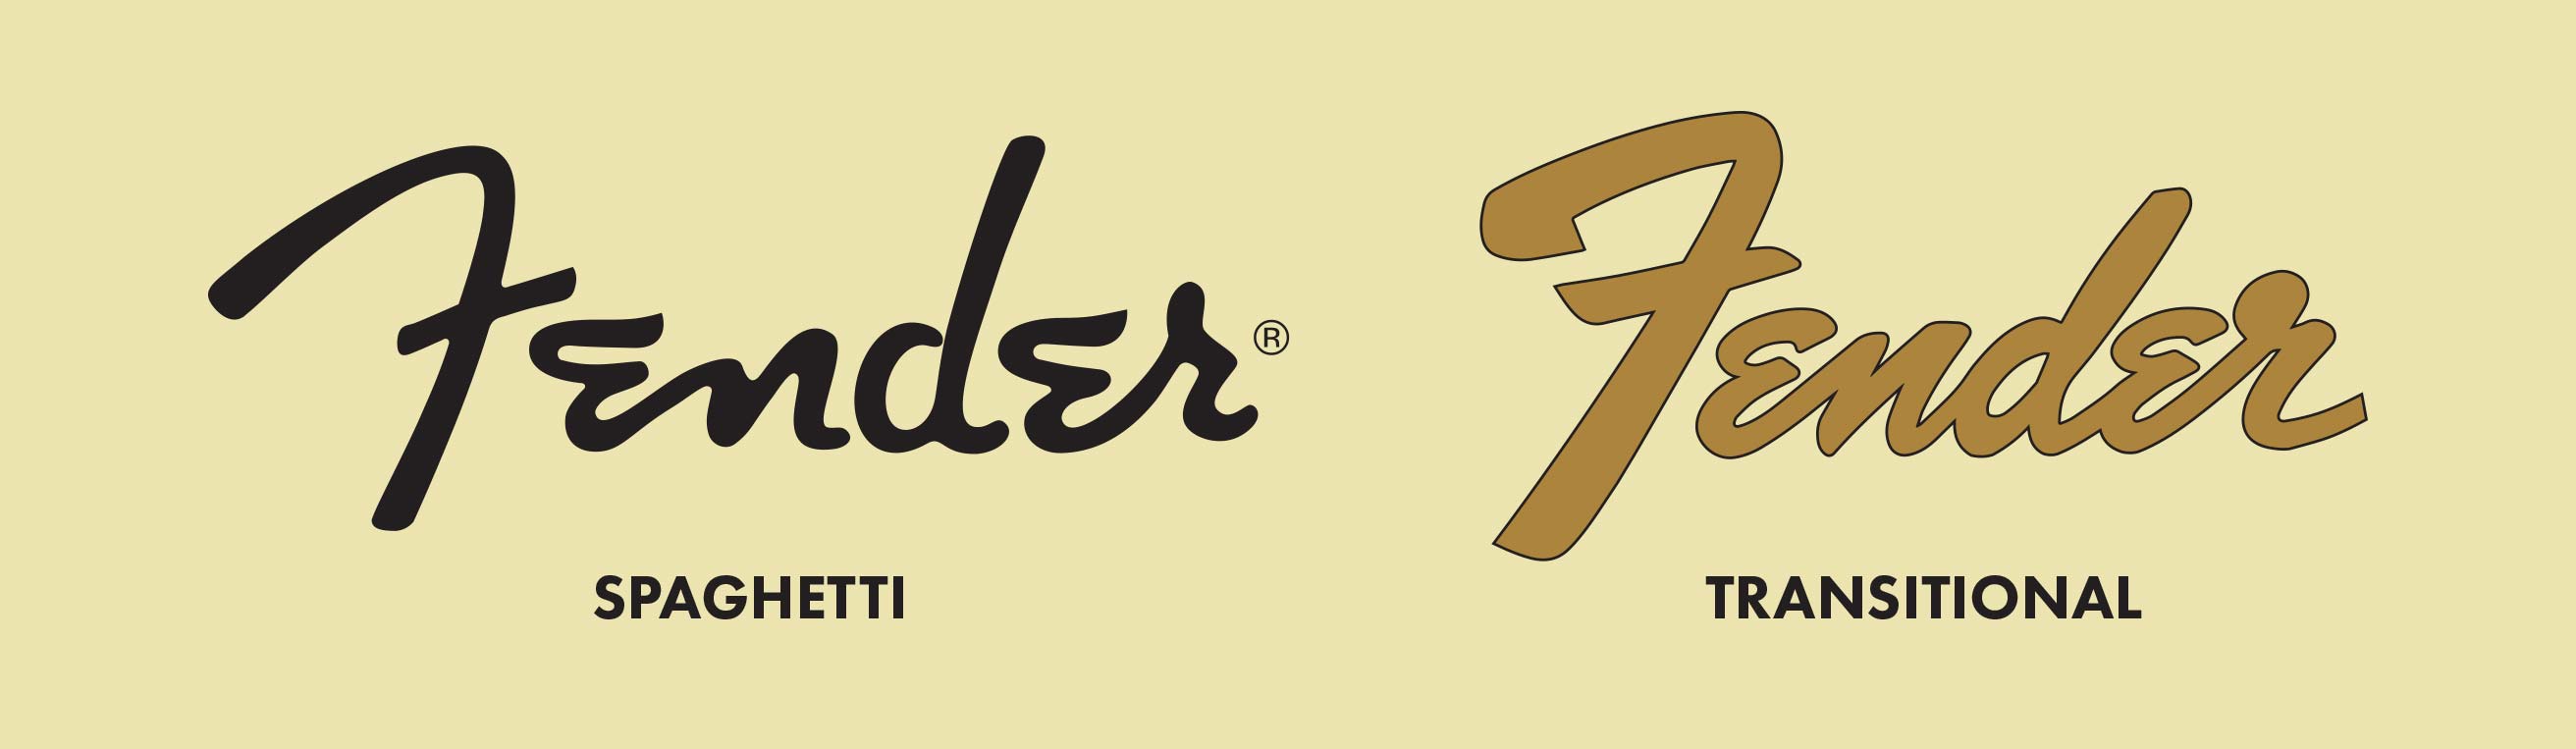 FENDER - Fender Spaghetti Logo Coaches Jacket Black XL